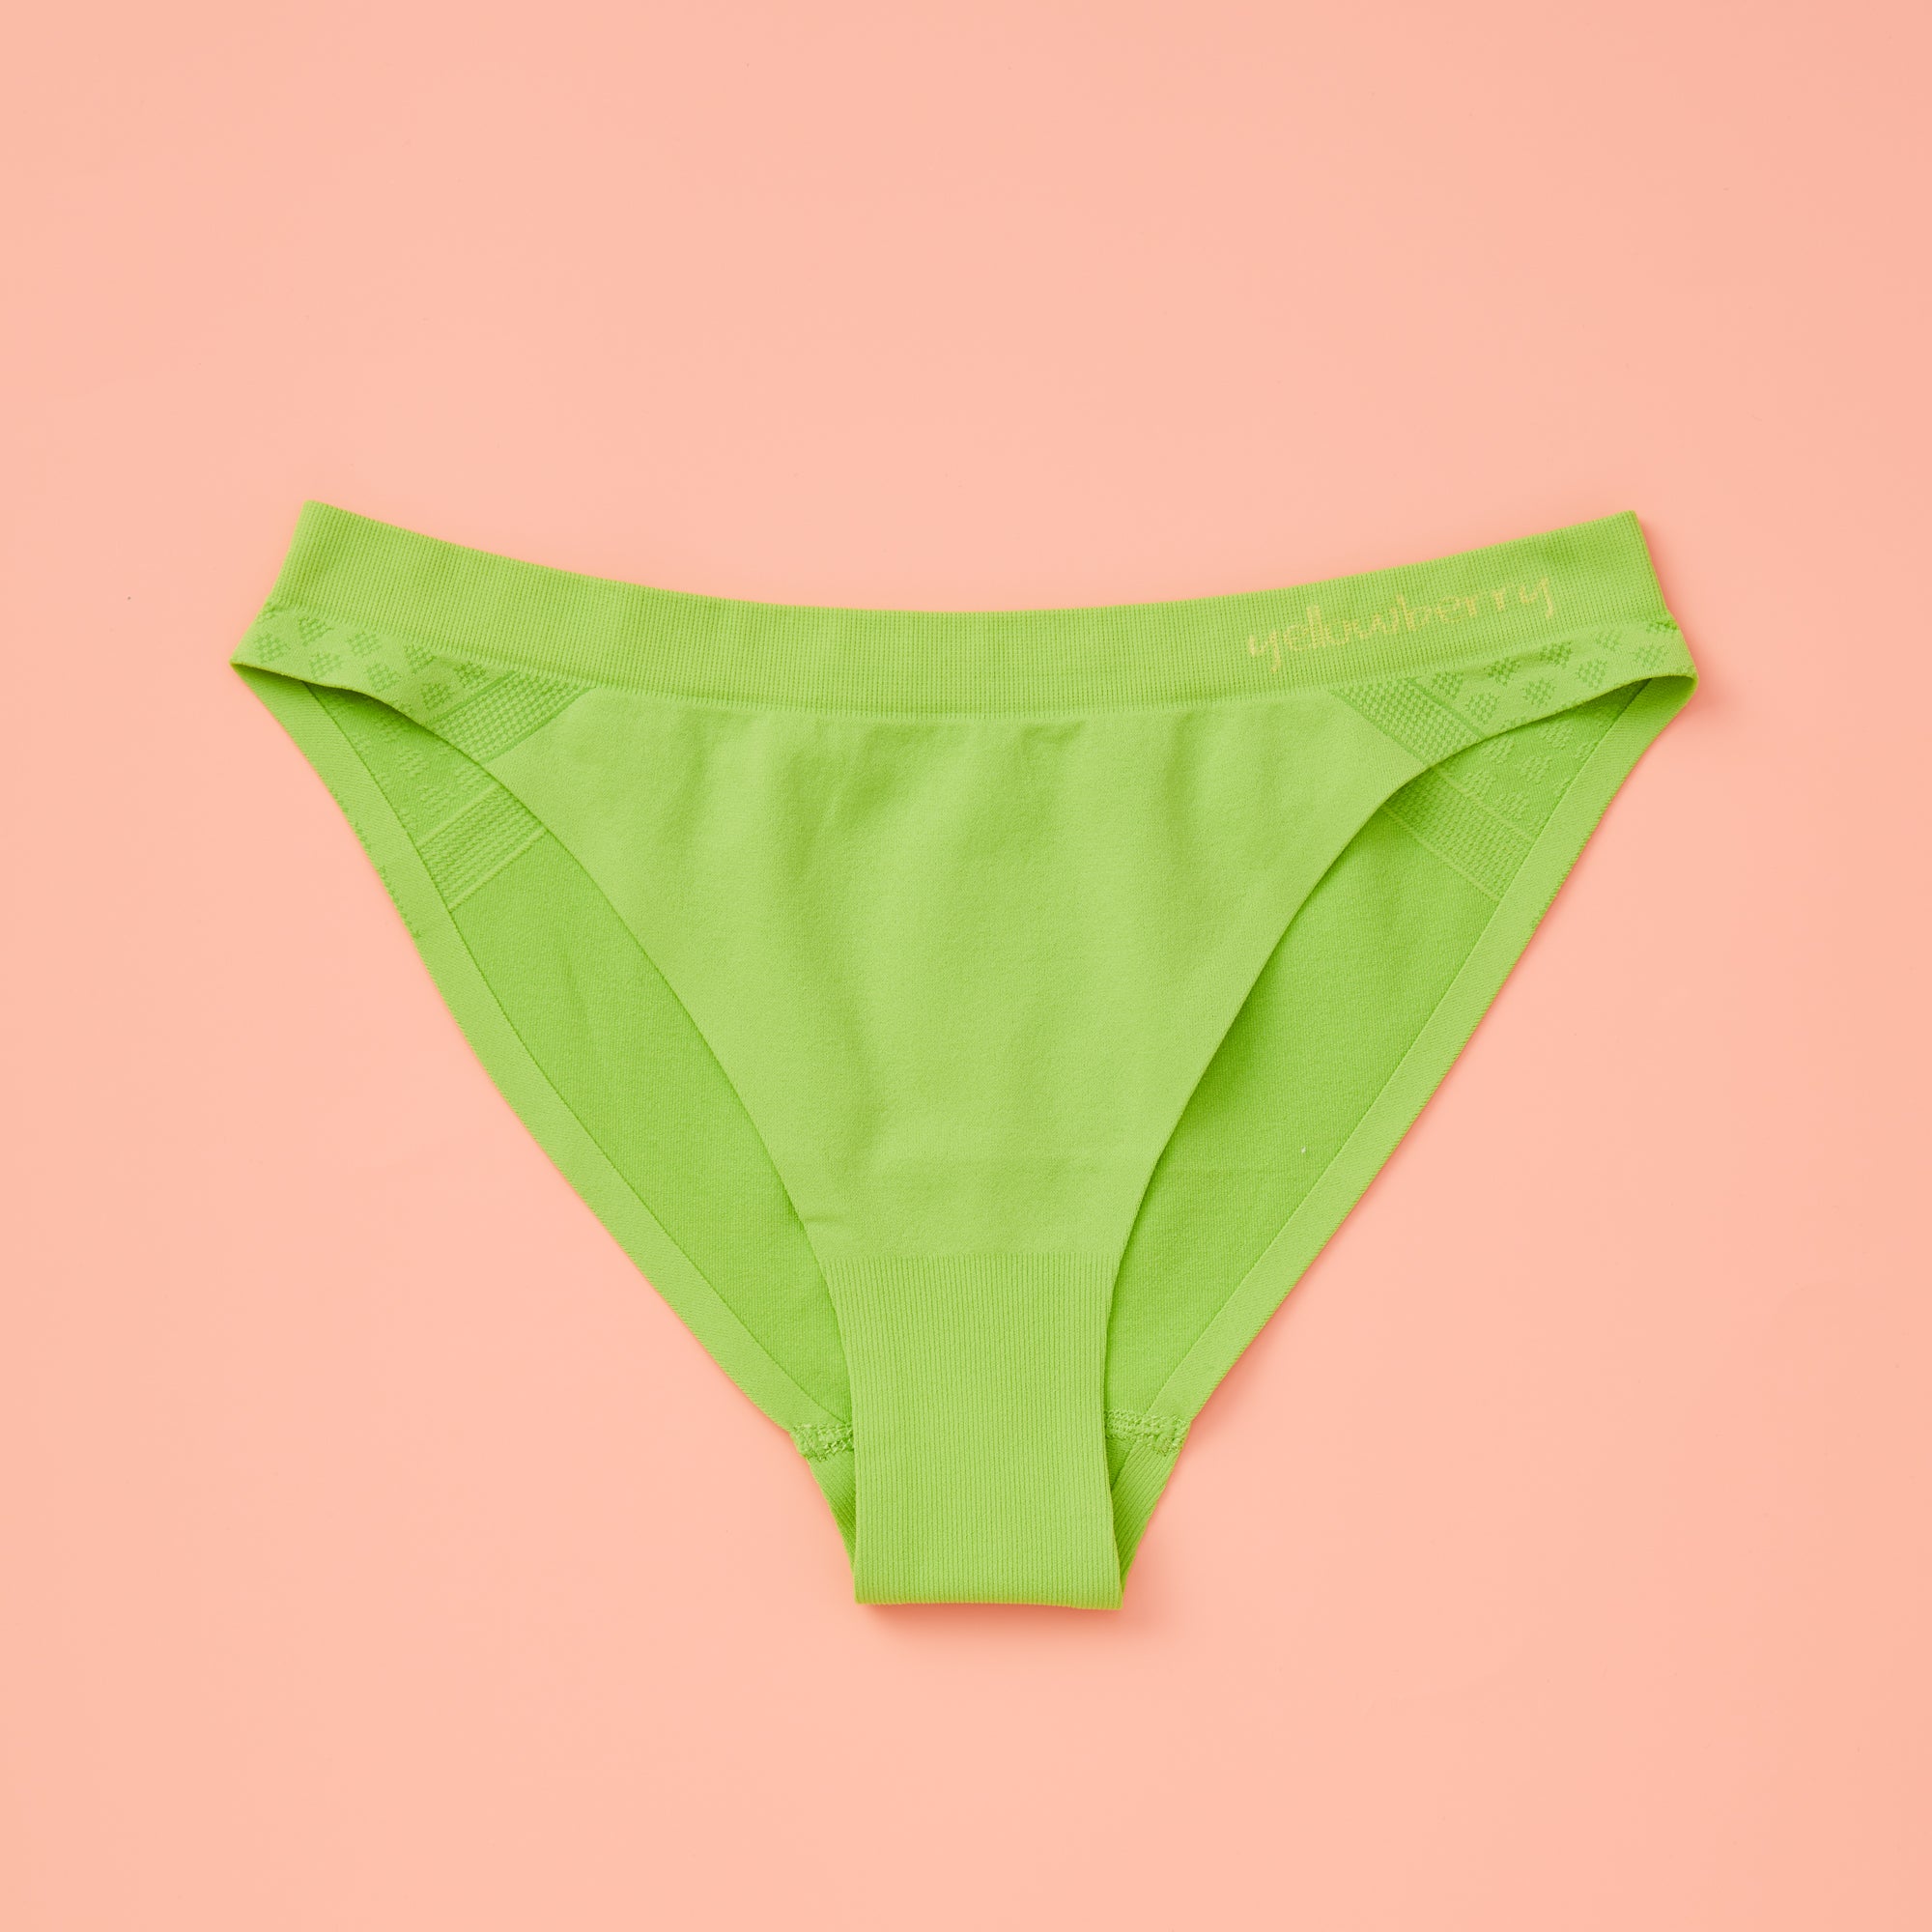 Can You Cut Seamless Underwear?